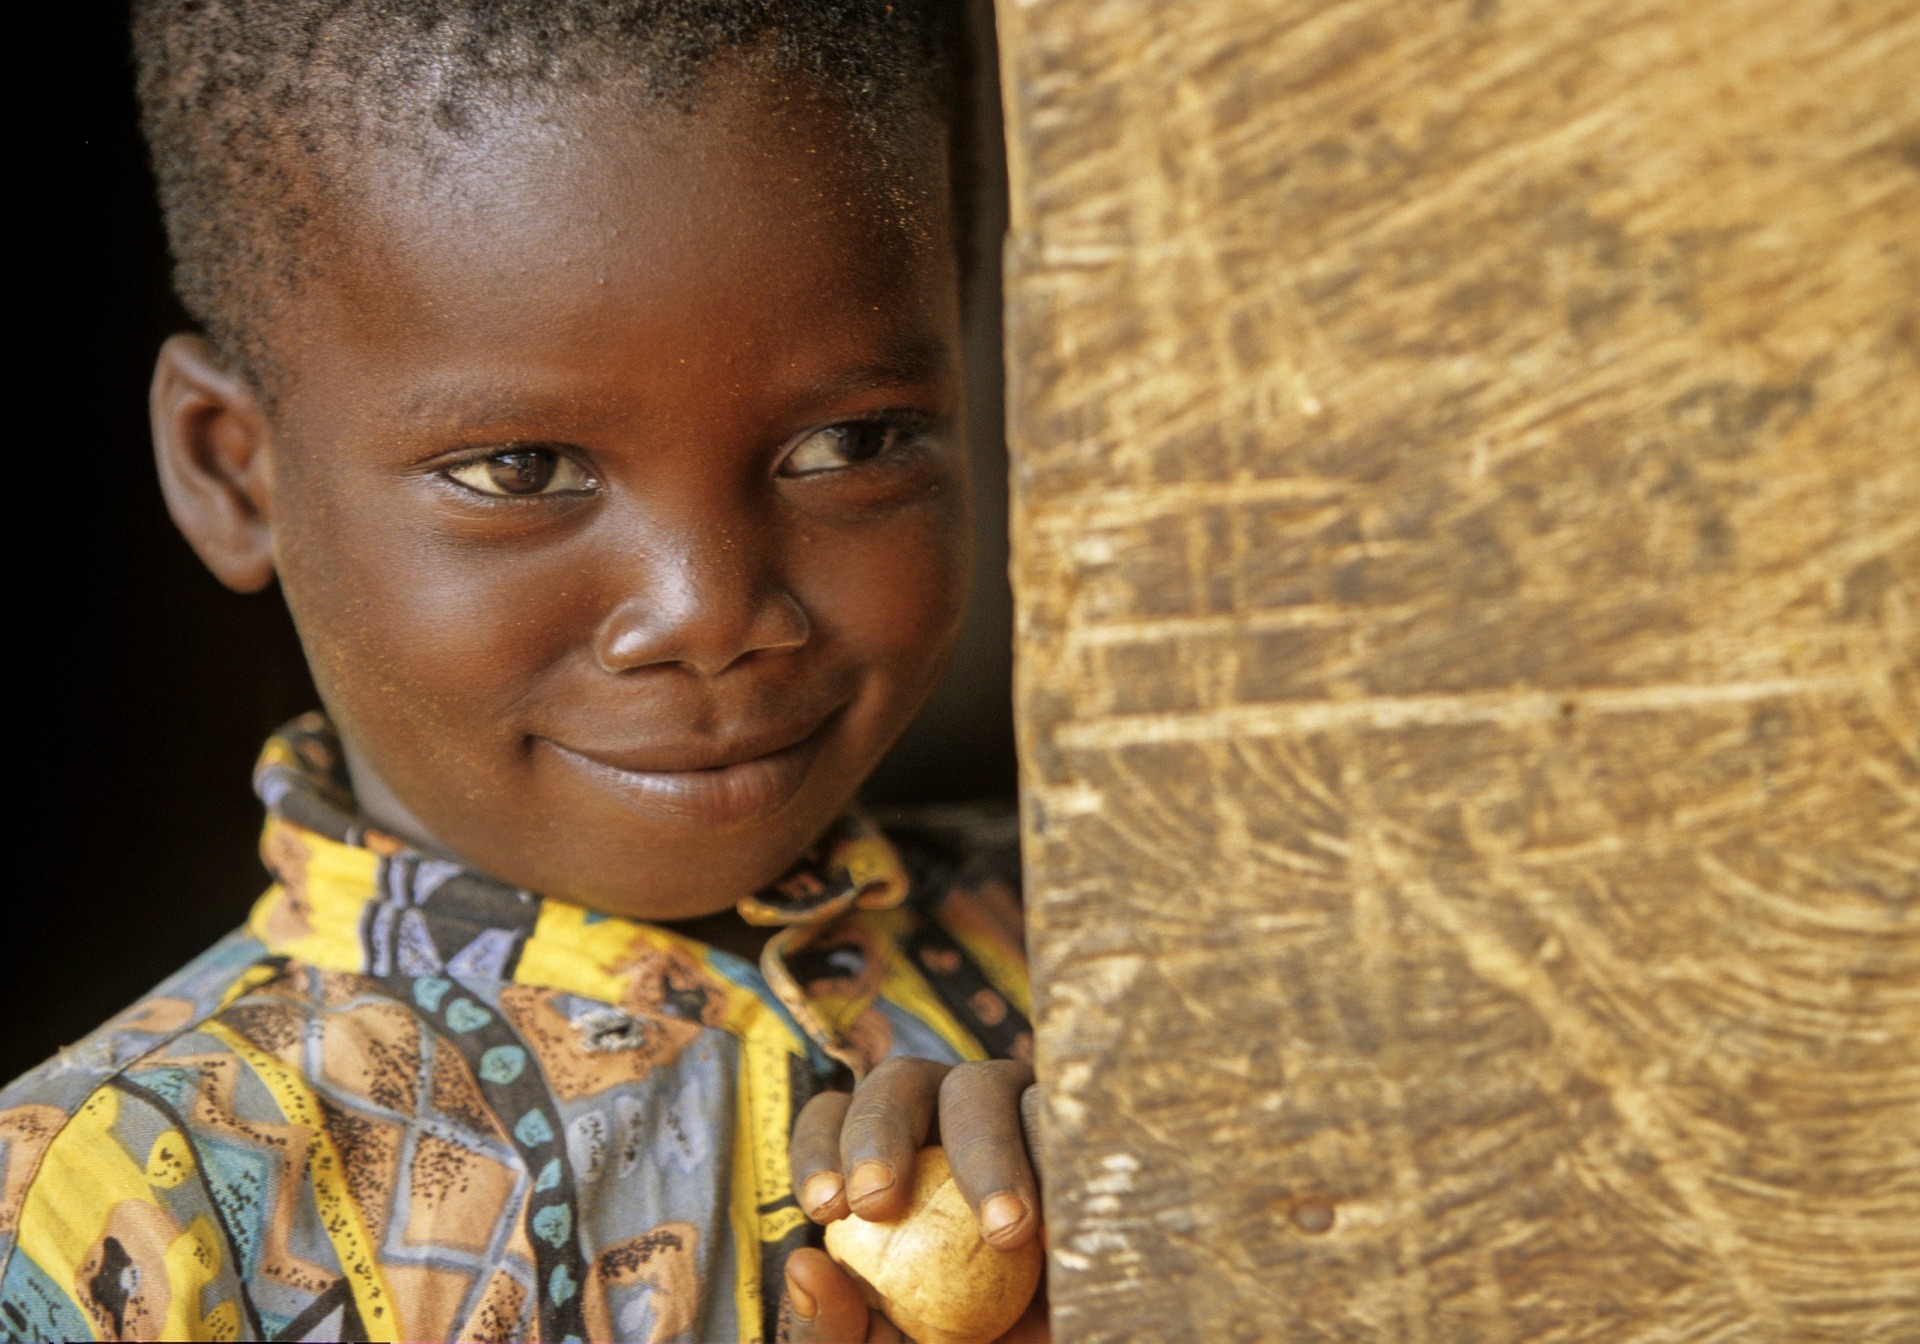 National Standards for Residential Homes for Orphans and Vulnerable Children in Ghana